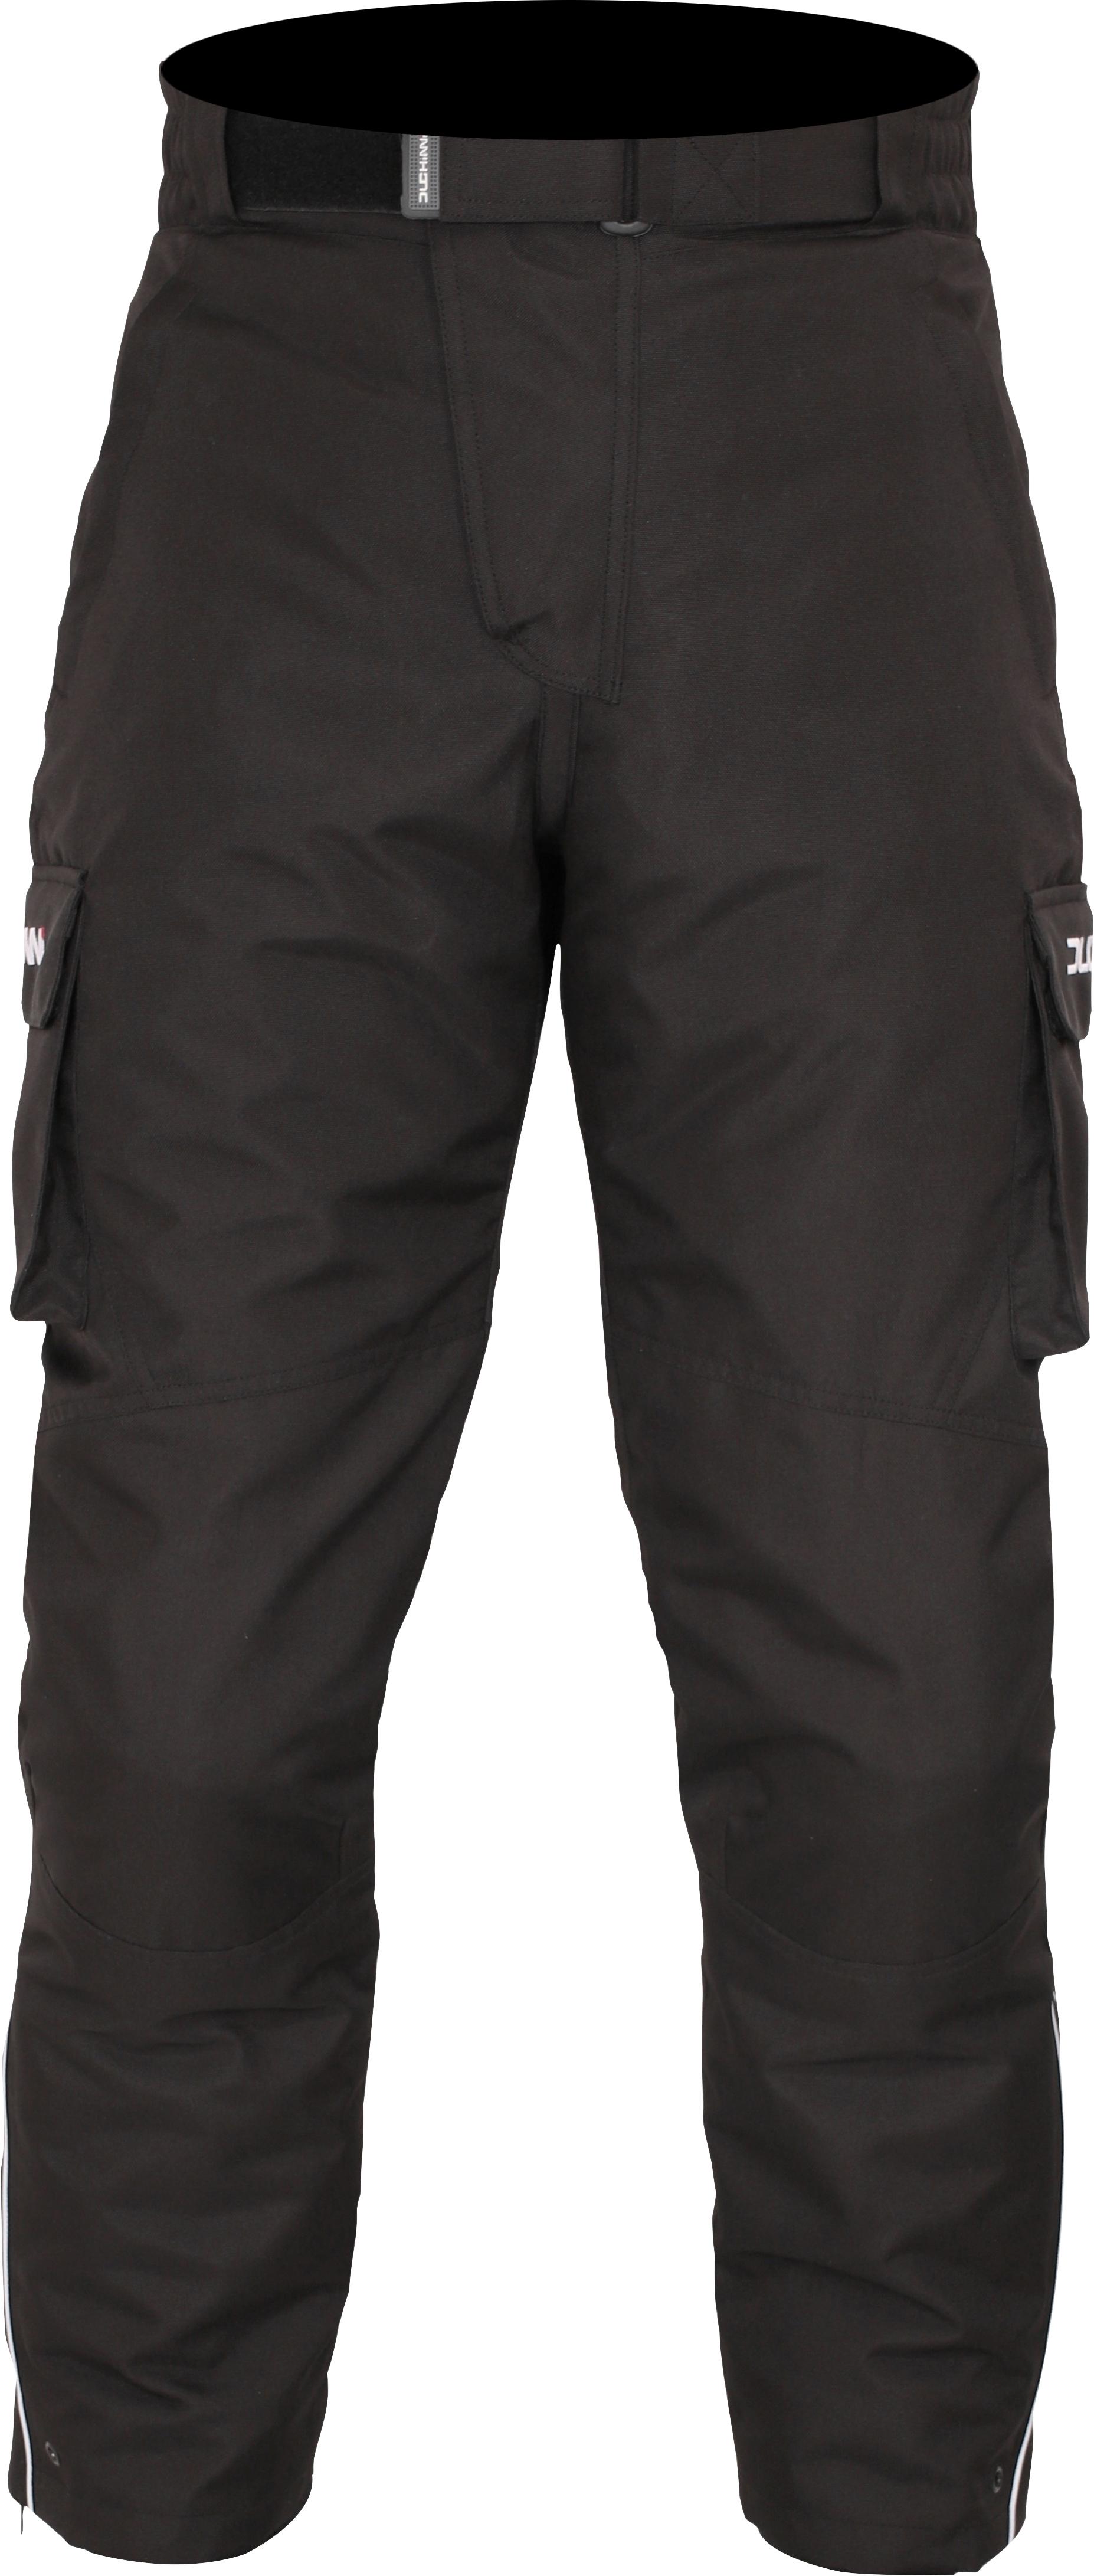 Duchinni Pacific Motorcycle Short Jeans - Black, M